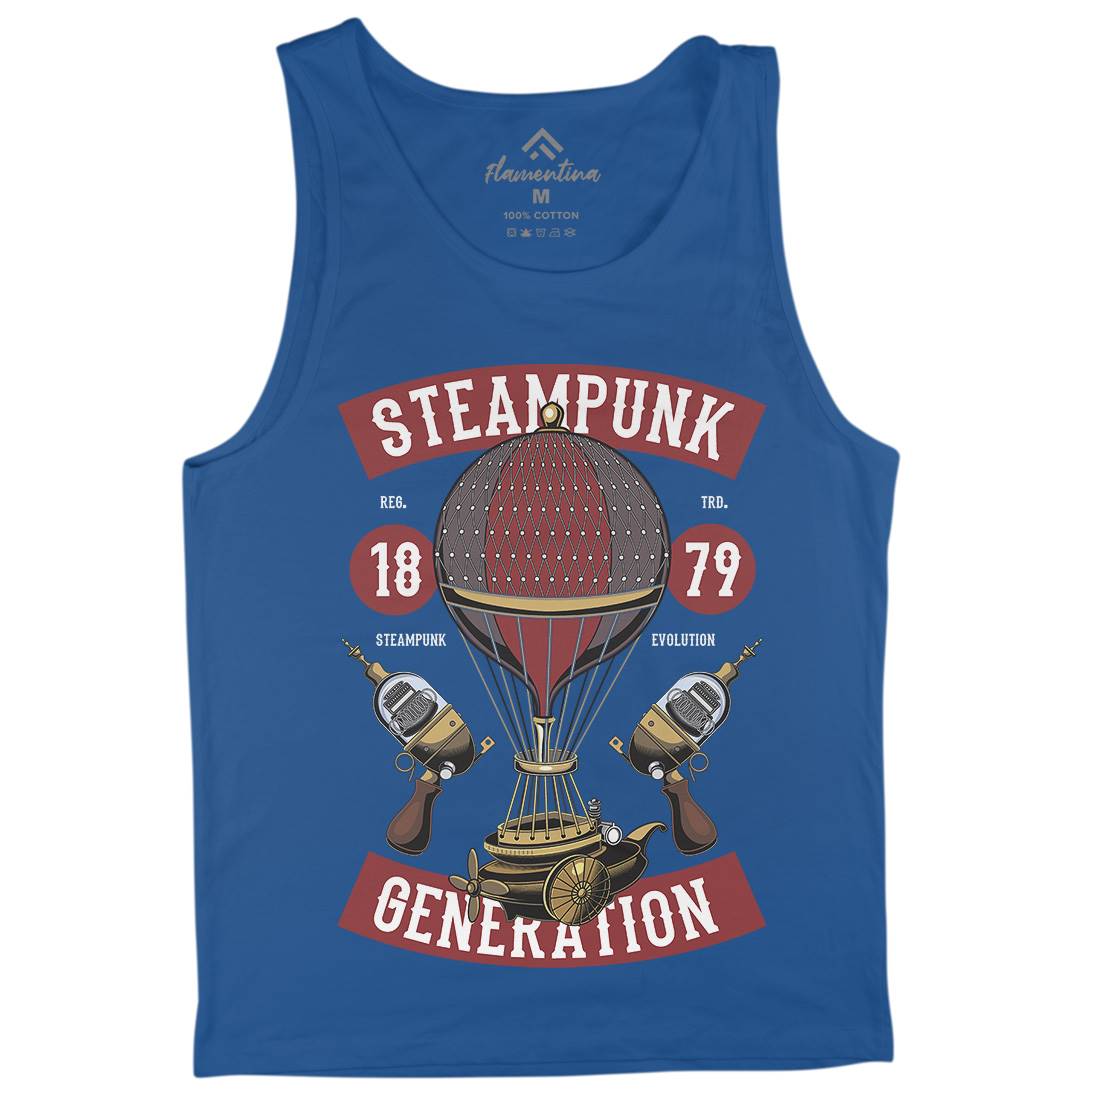 Generation Mens Tank Top Vest Steampunk C449